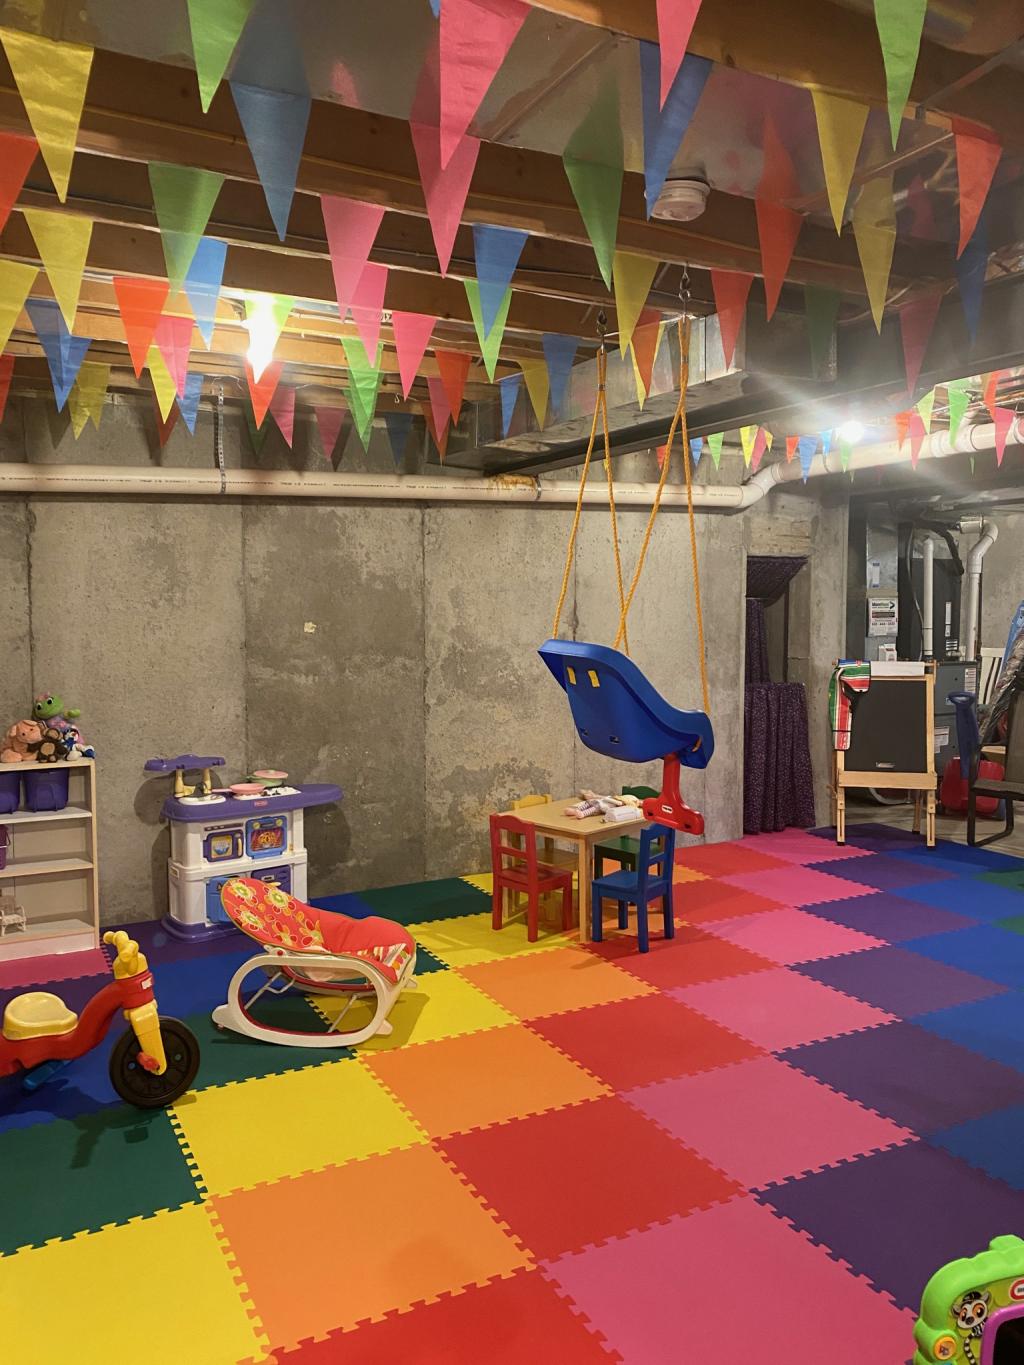 60CM Waterproof Interlocking Soft Eva Foam Mats Pads Room Garage Floor Tiles Mat Set Kids Baby Play Puzzle Yoga Fitness Gym Exercise Mats 12/16/48 PCS Grey/Black AgoHike-5U 60CM